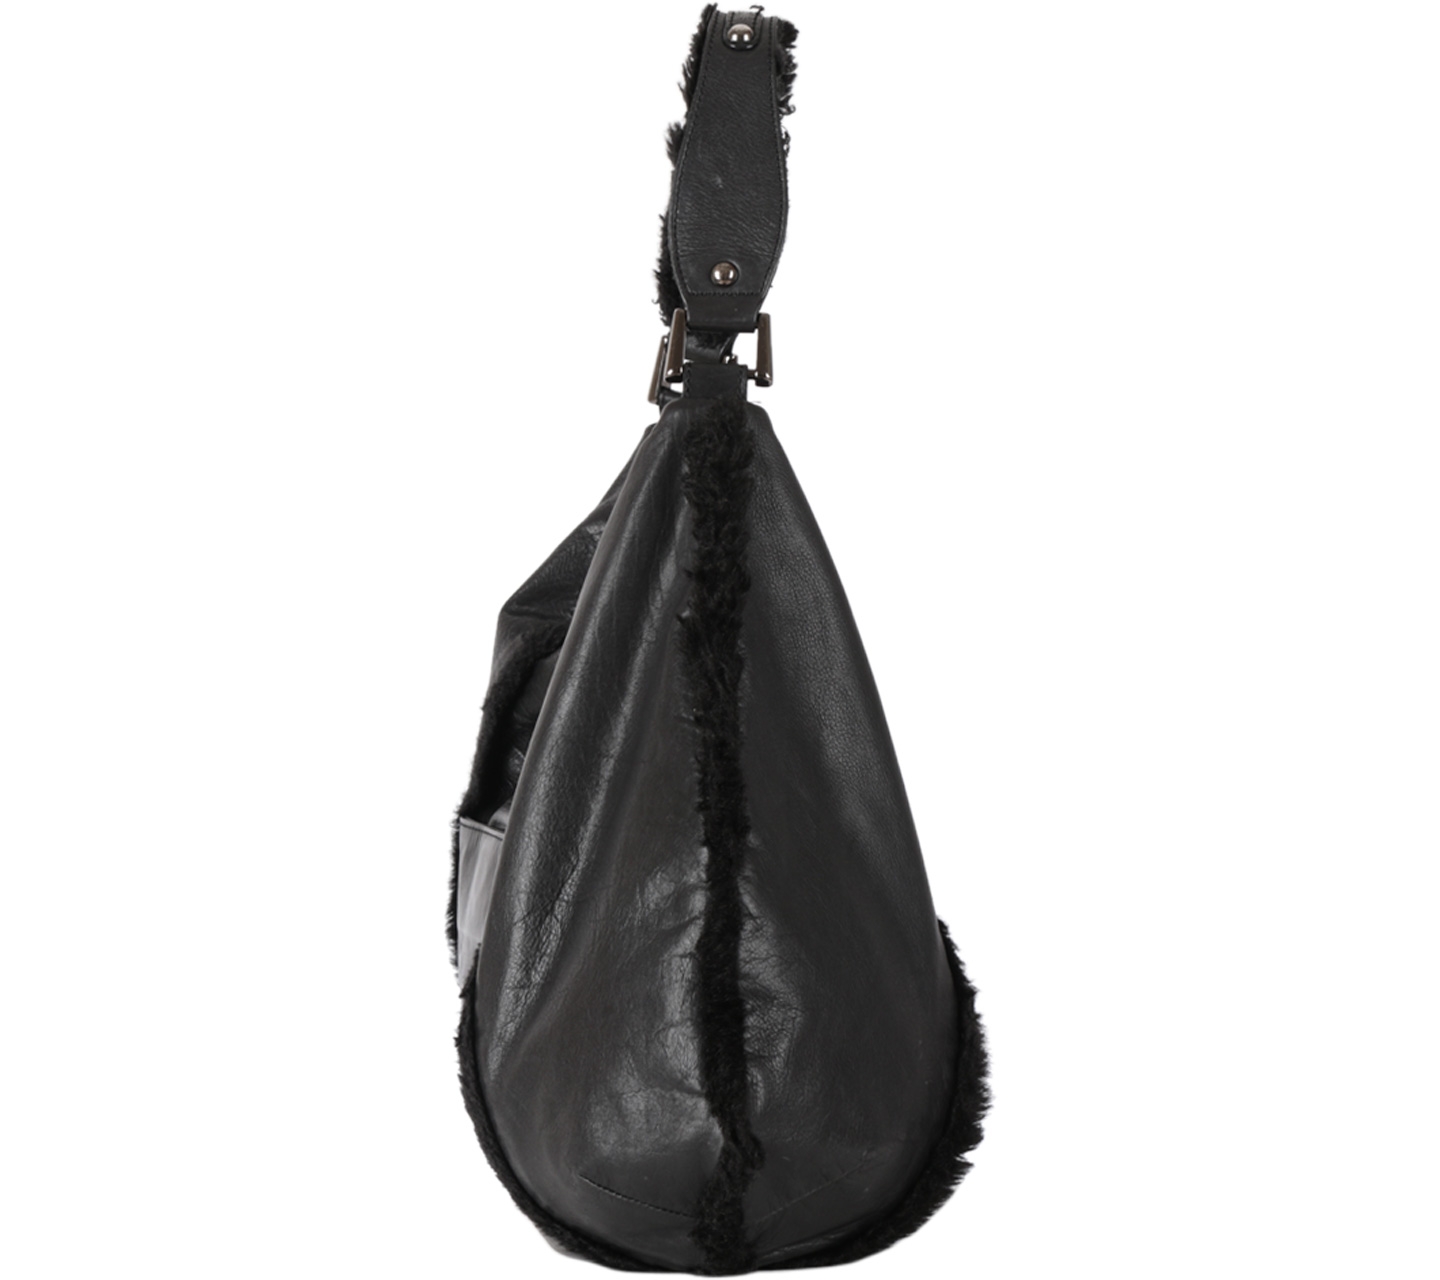 Kenneth Cole Black Furry Leather Handbag